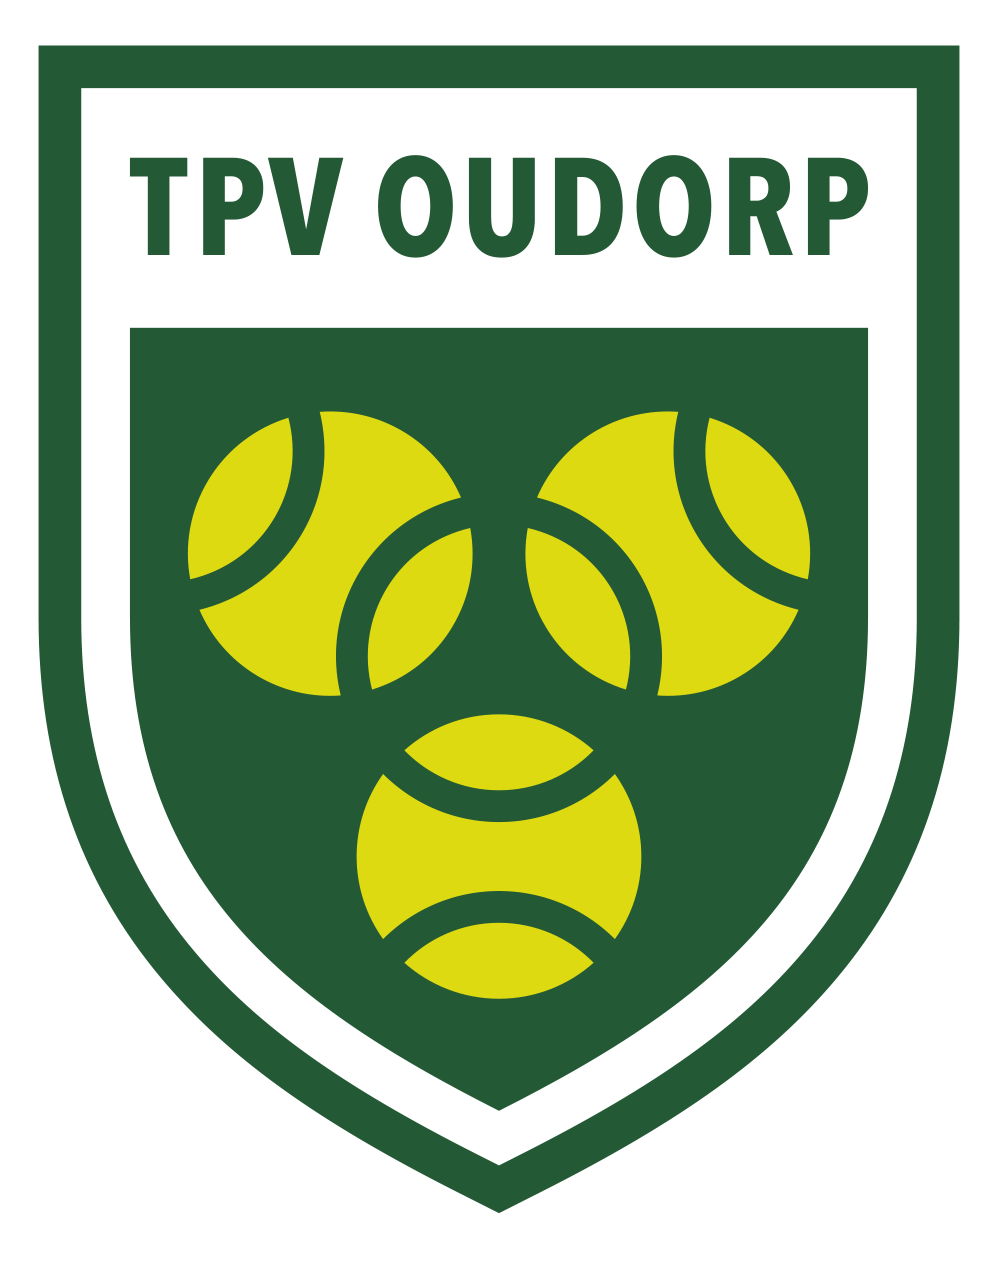 Profile image of venue TV Oudorp